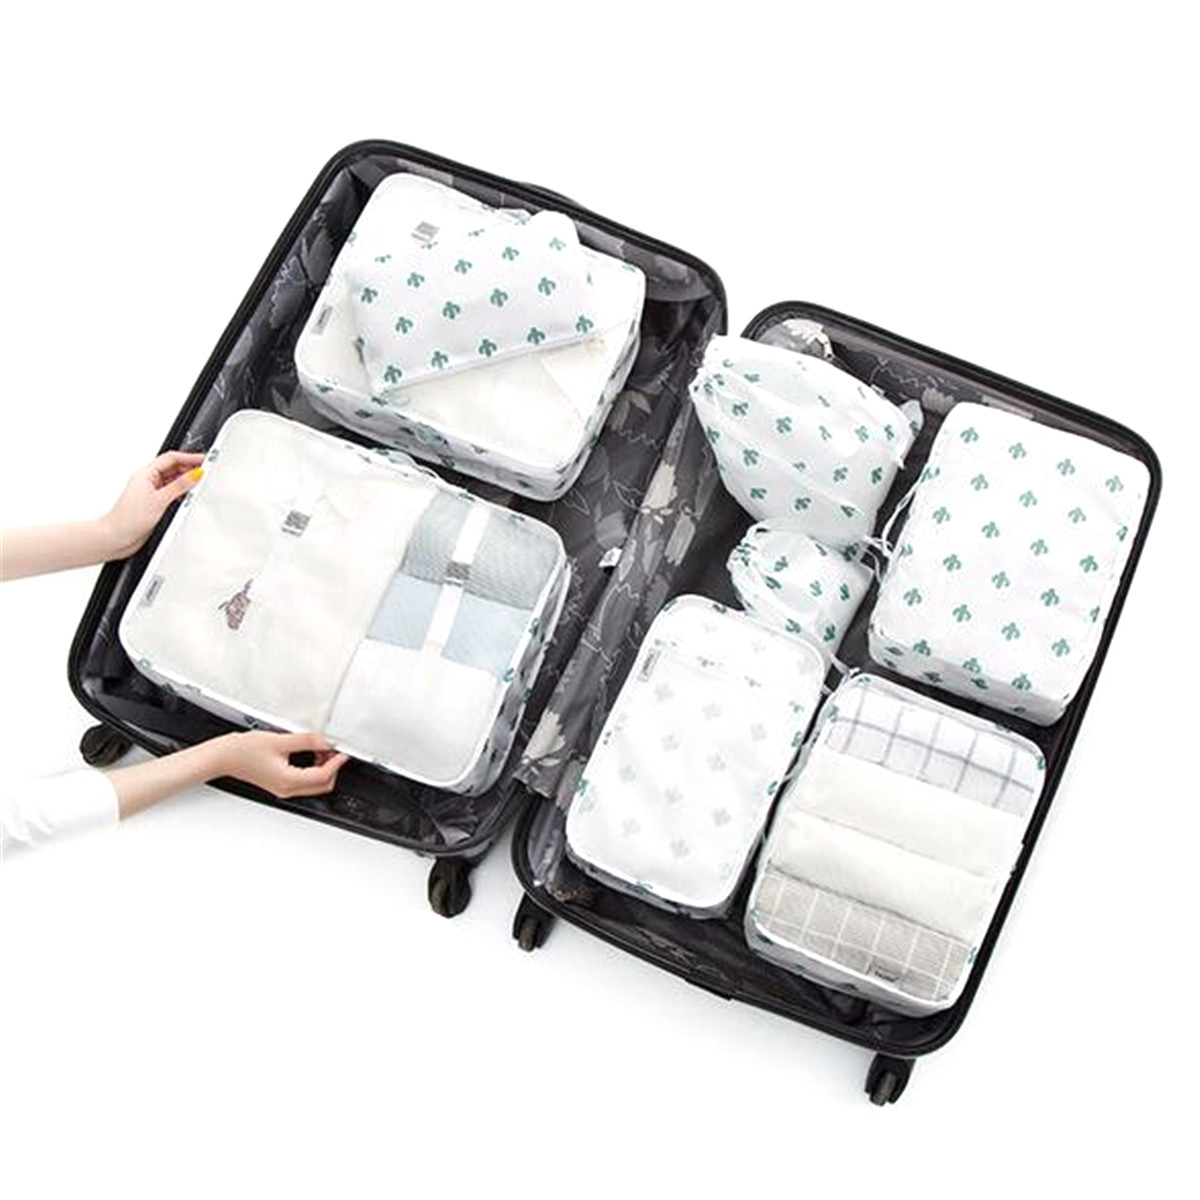 Backpack Organizer Pouches
 8PCS Set Travel Luggage Organizer Storage Pouches Suitcase